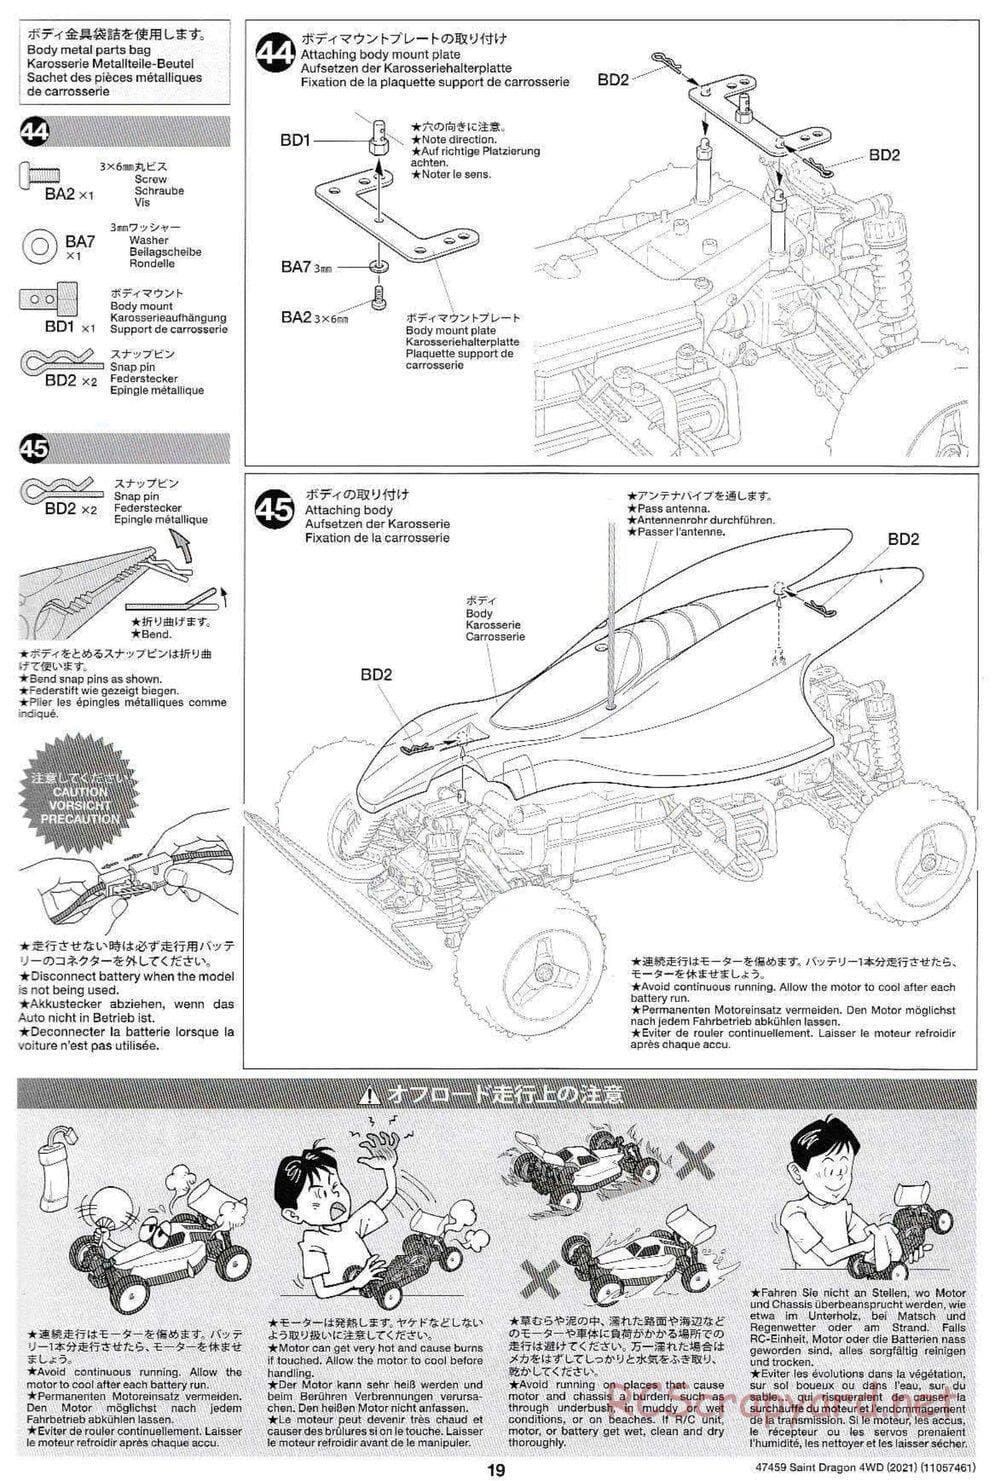 Tamiya - Saint Dragon (2021) Chassis - Manual - Page 19